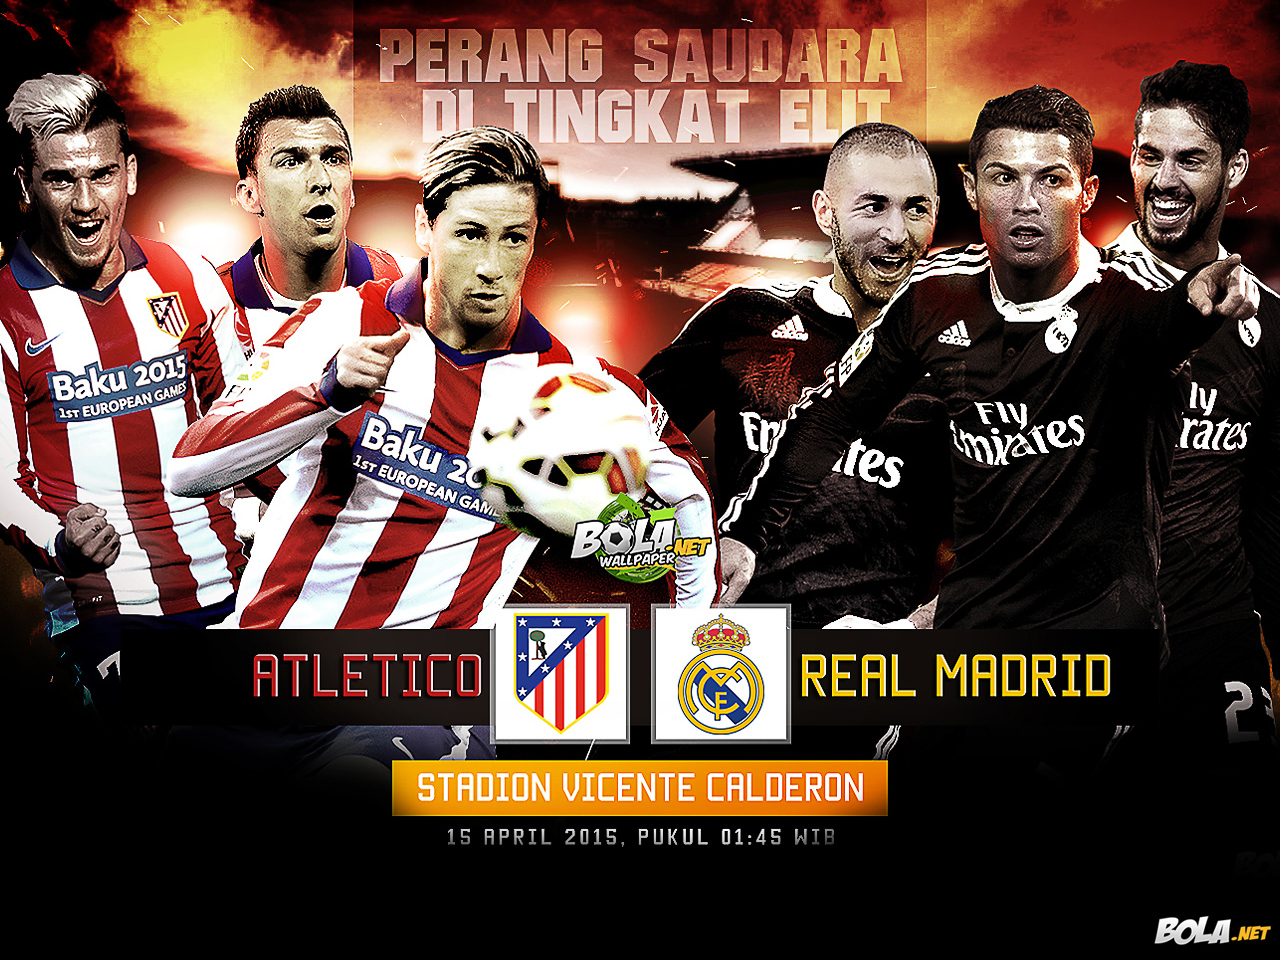 Deskripsi : Wallpaper Atletico Madrid Vs Real Madrid, size: 1280x960